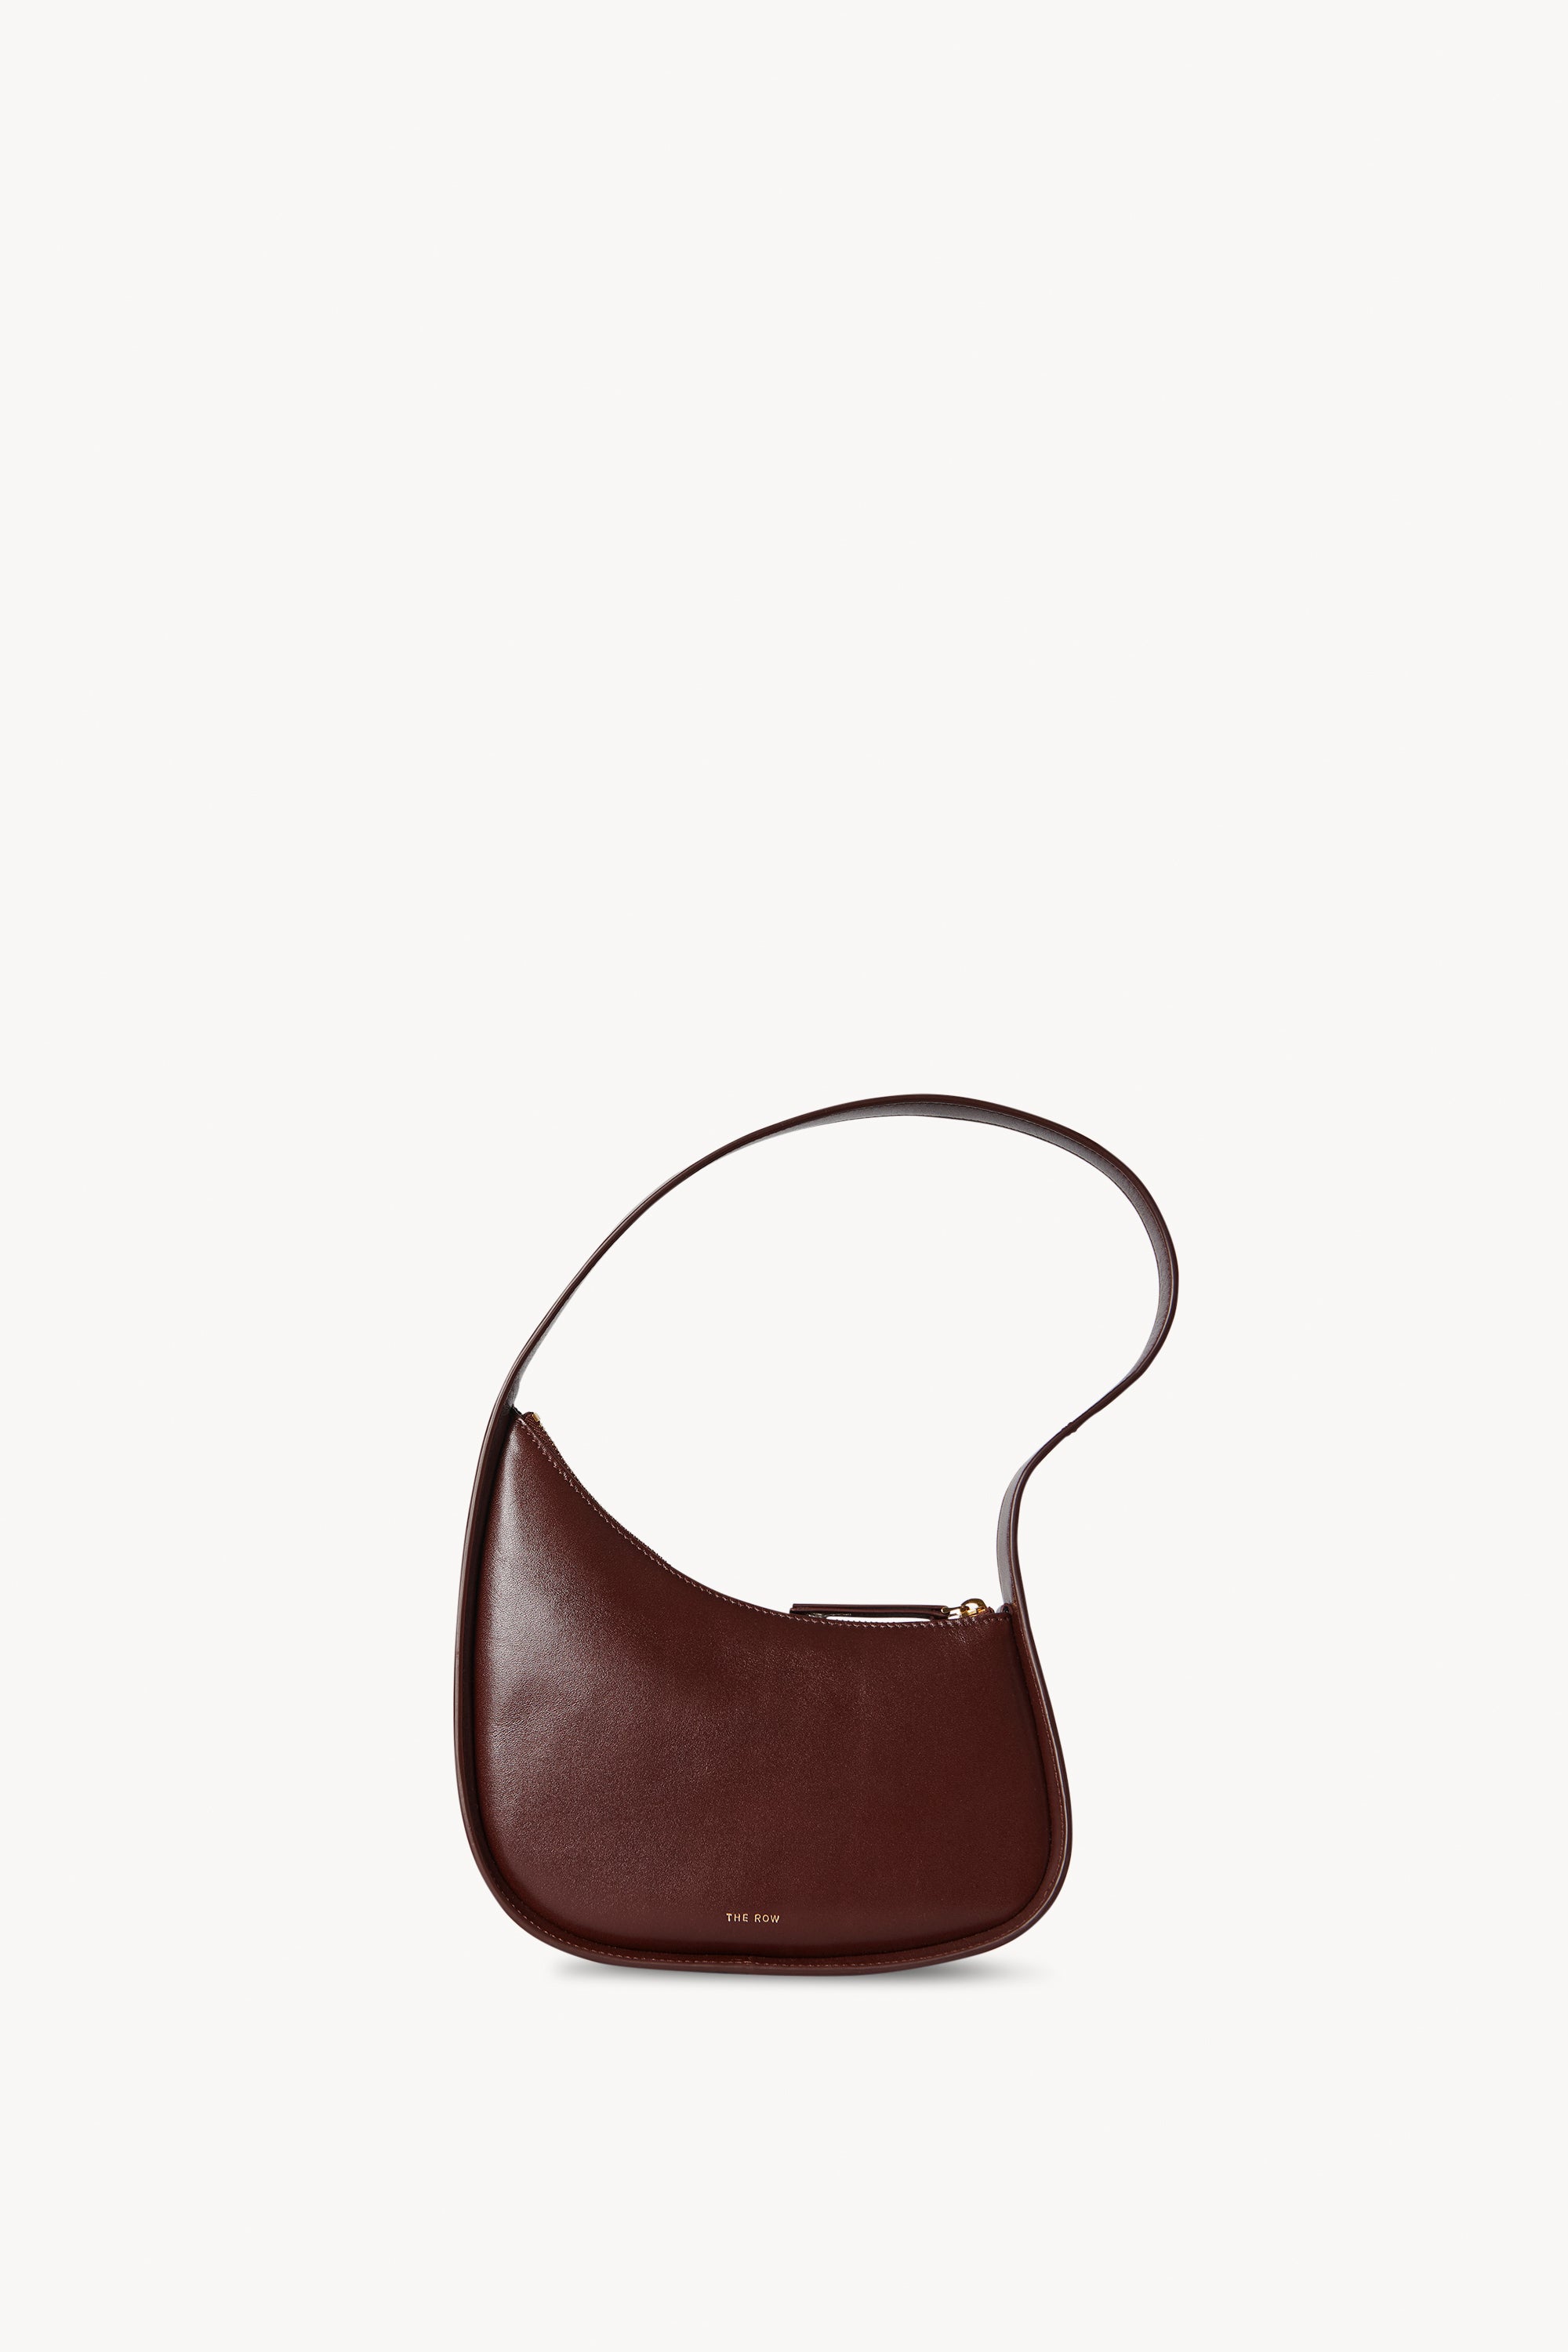 THE ROW Half Moon Shoulder Bag in Leather - Bergdorf Goodman